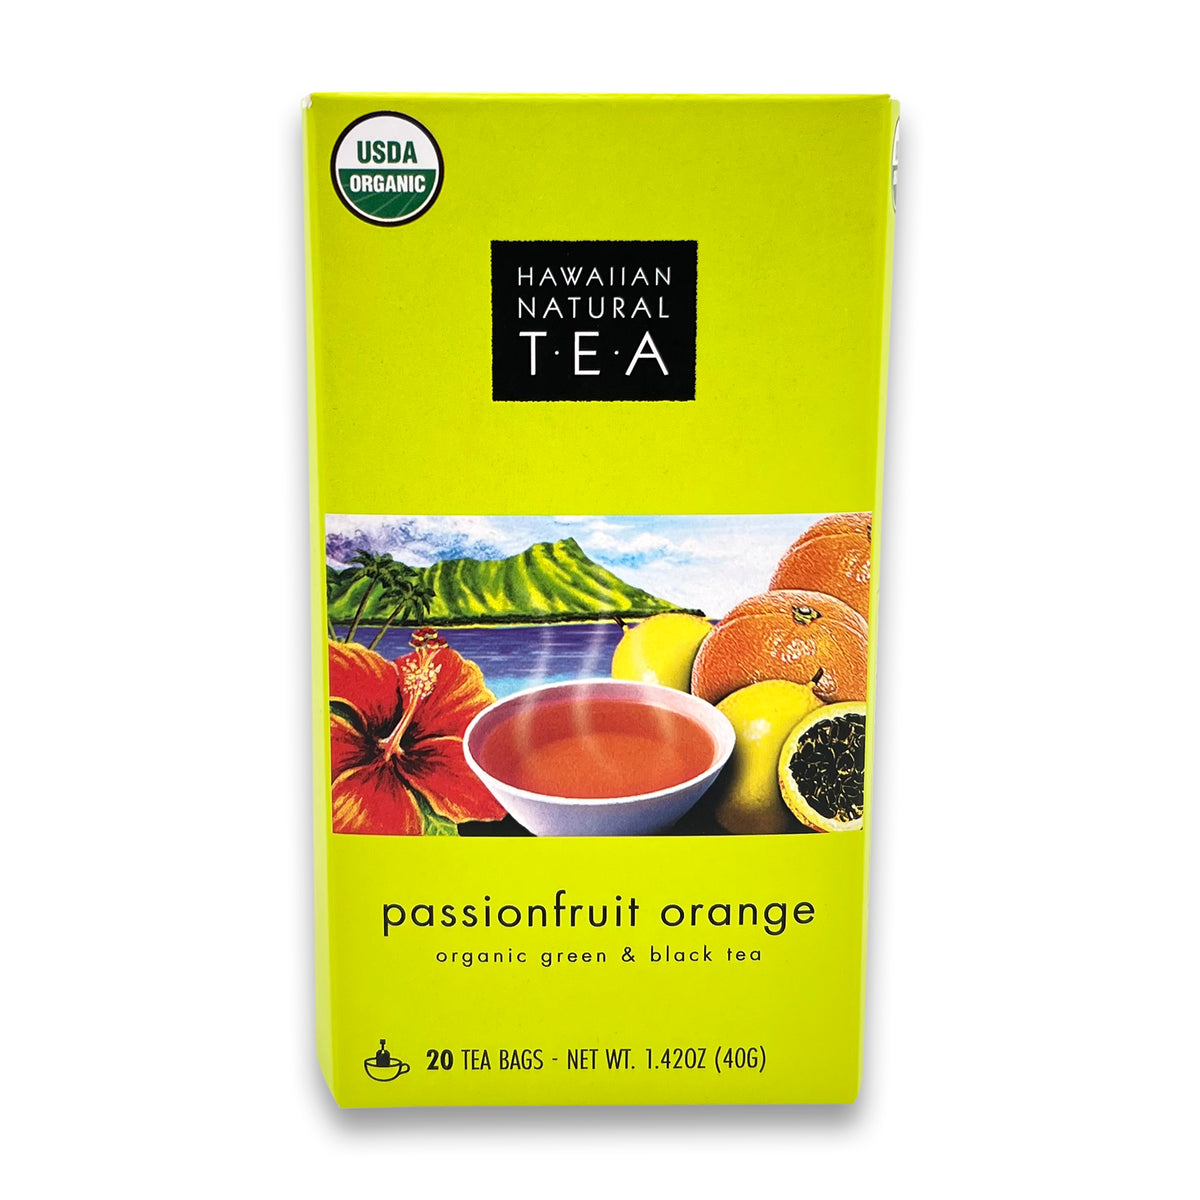 Pop-Up Mākeke - Tea Chest Hawaii - Organic Green &amp; Black Tea - Passionfruit Orange - Front View